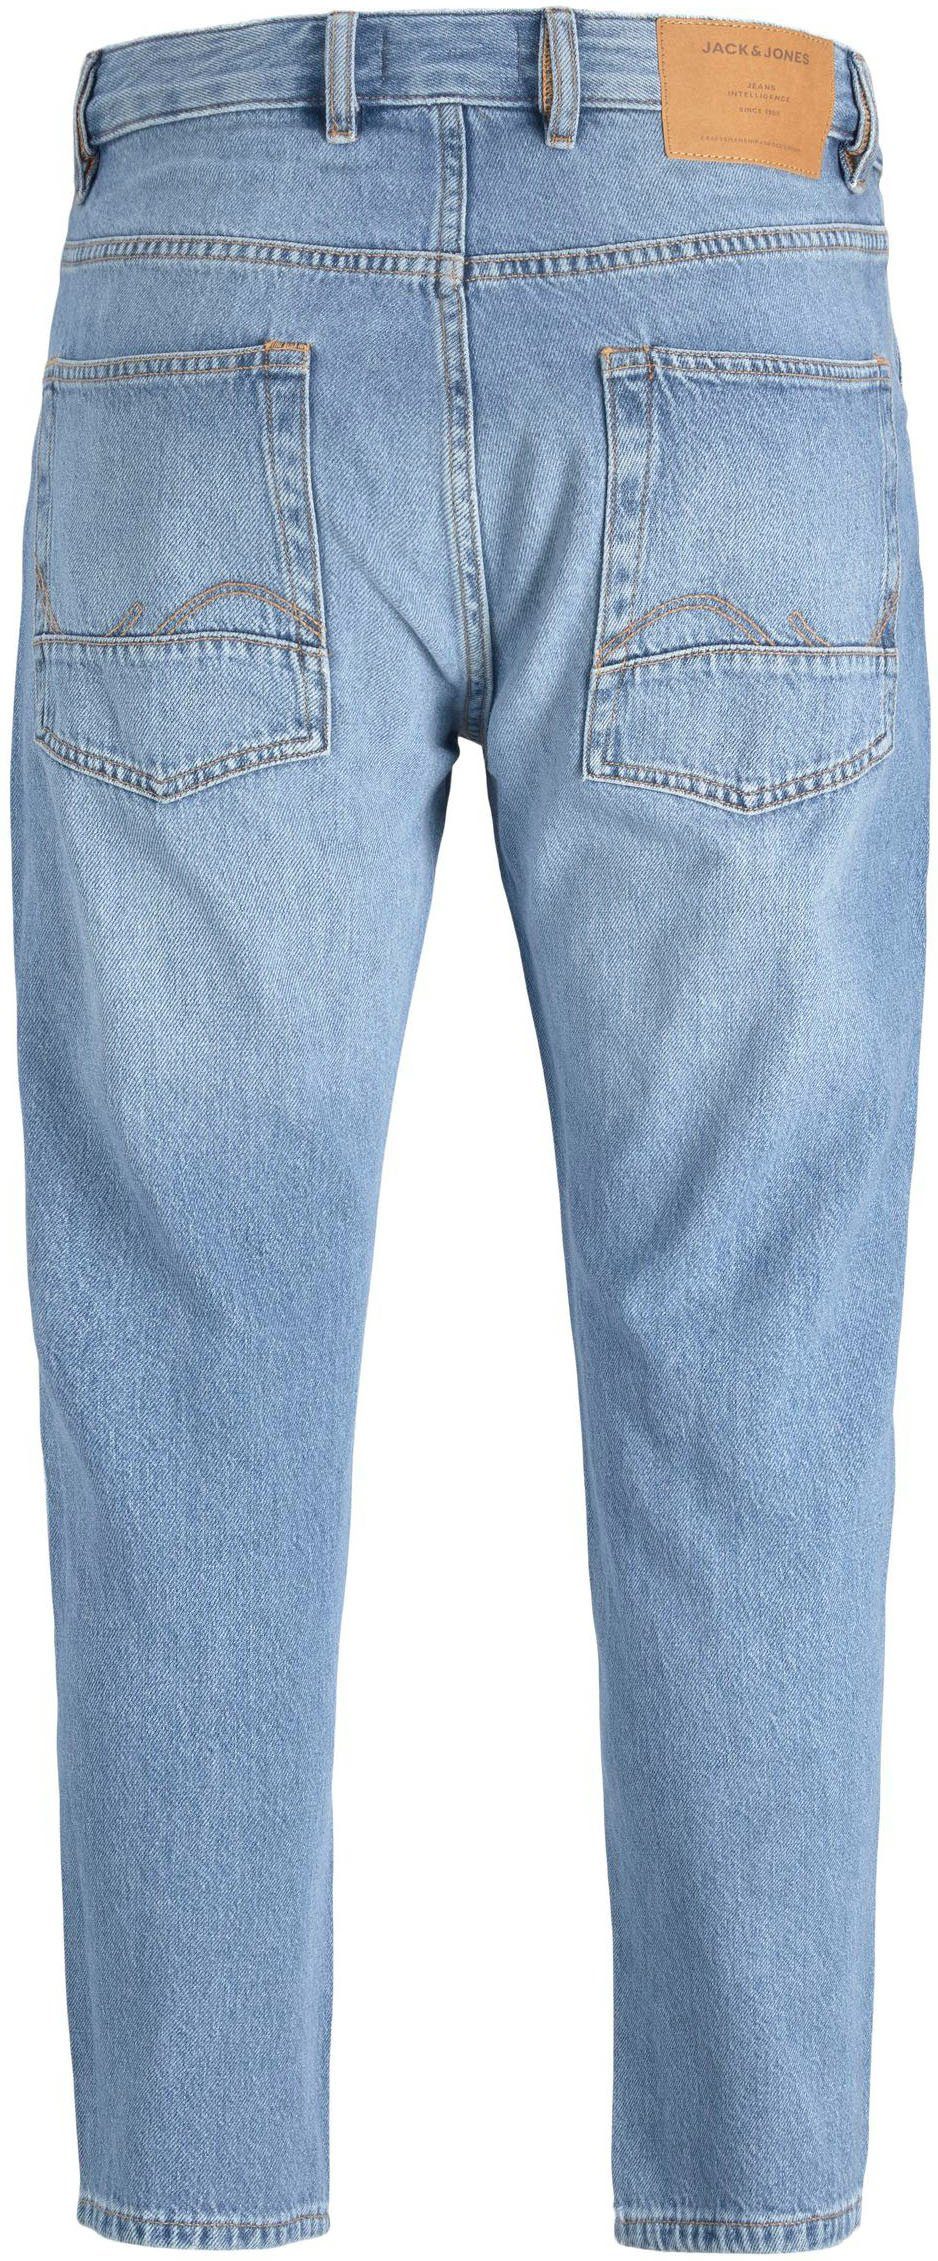 CROPPED Jack & JJORIGINAL JJIFRANK Jones Tapered-fit-Jeans light-blue-denim